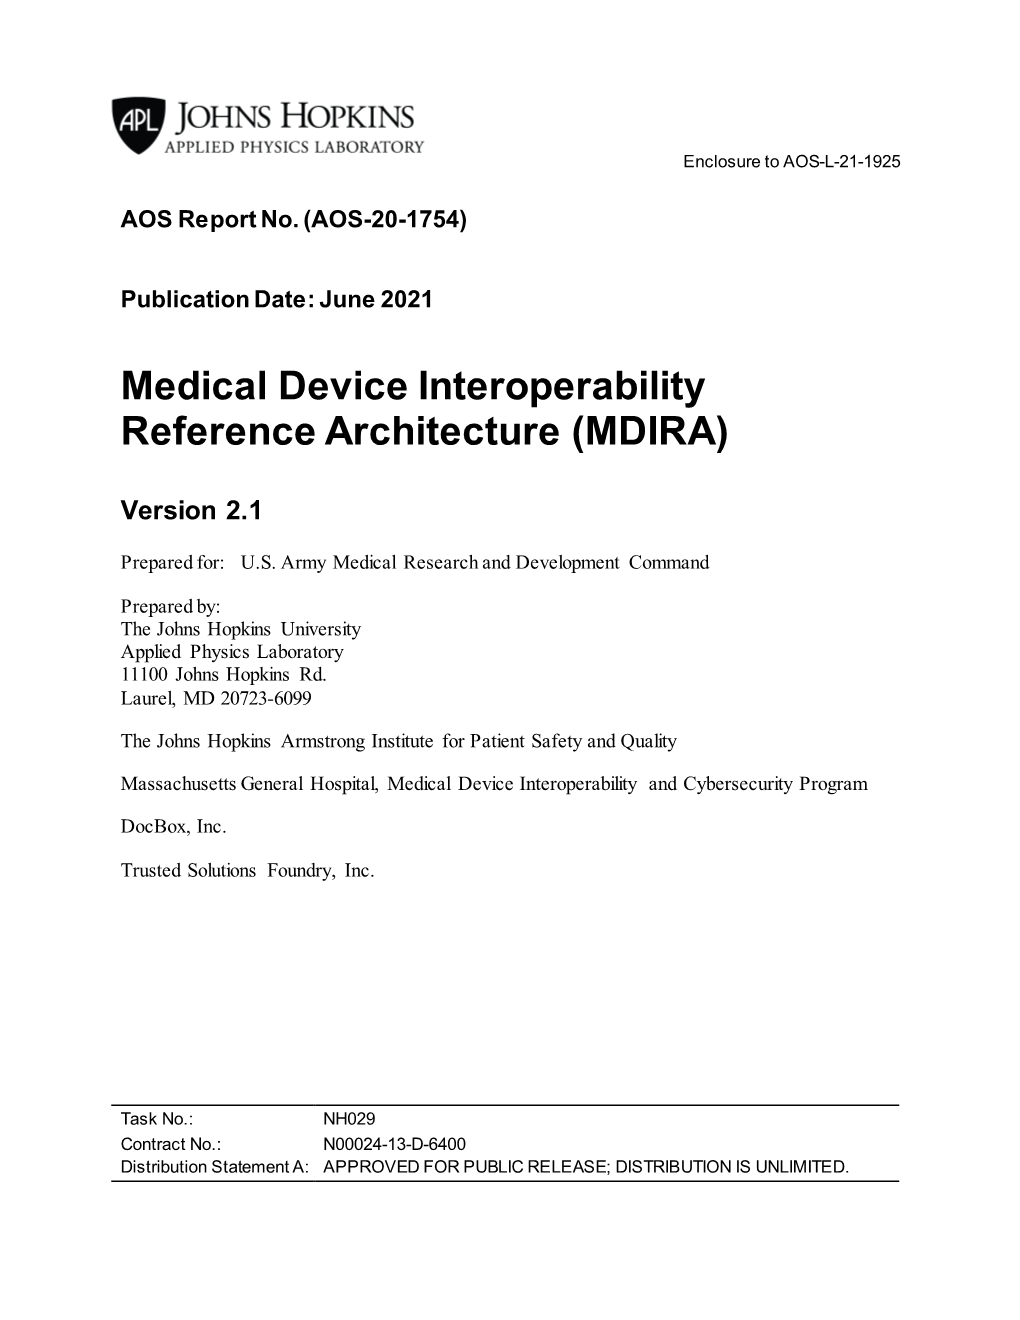 Medical Device Interoperability Reference Architecture (MDIRA)